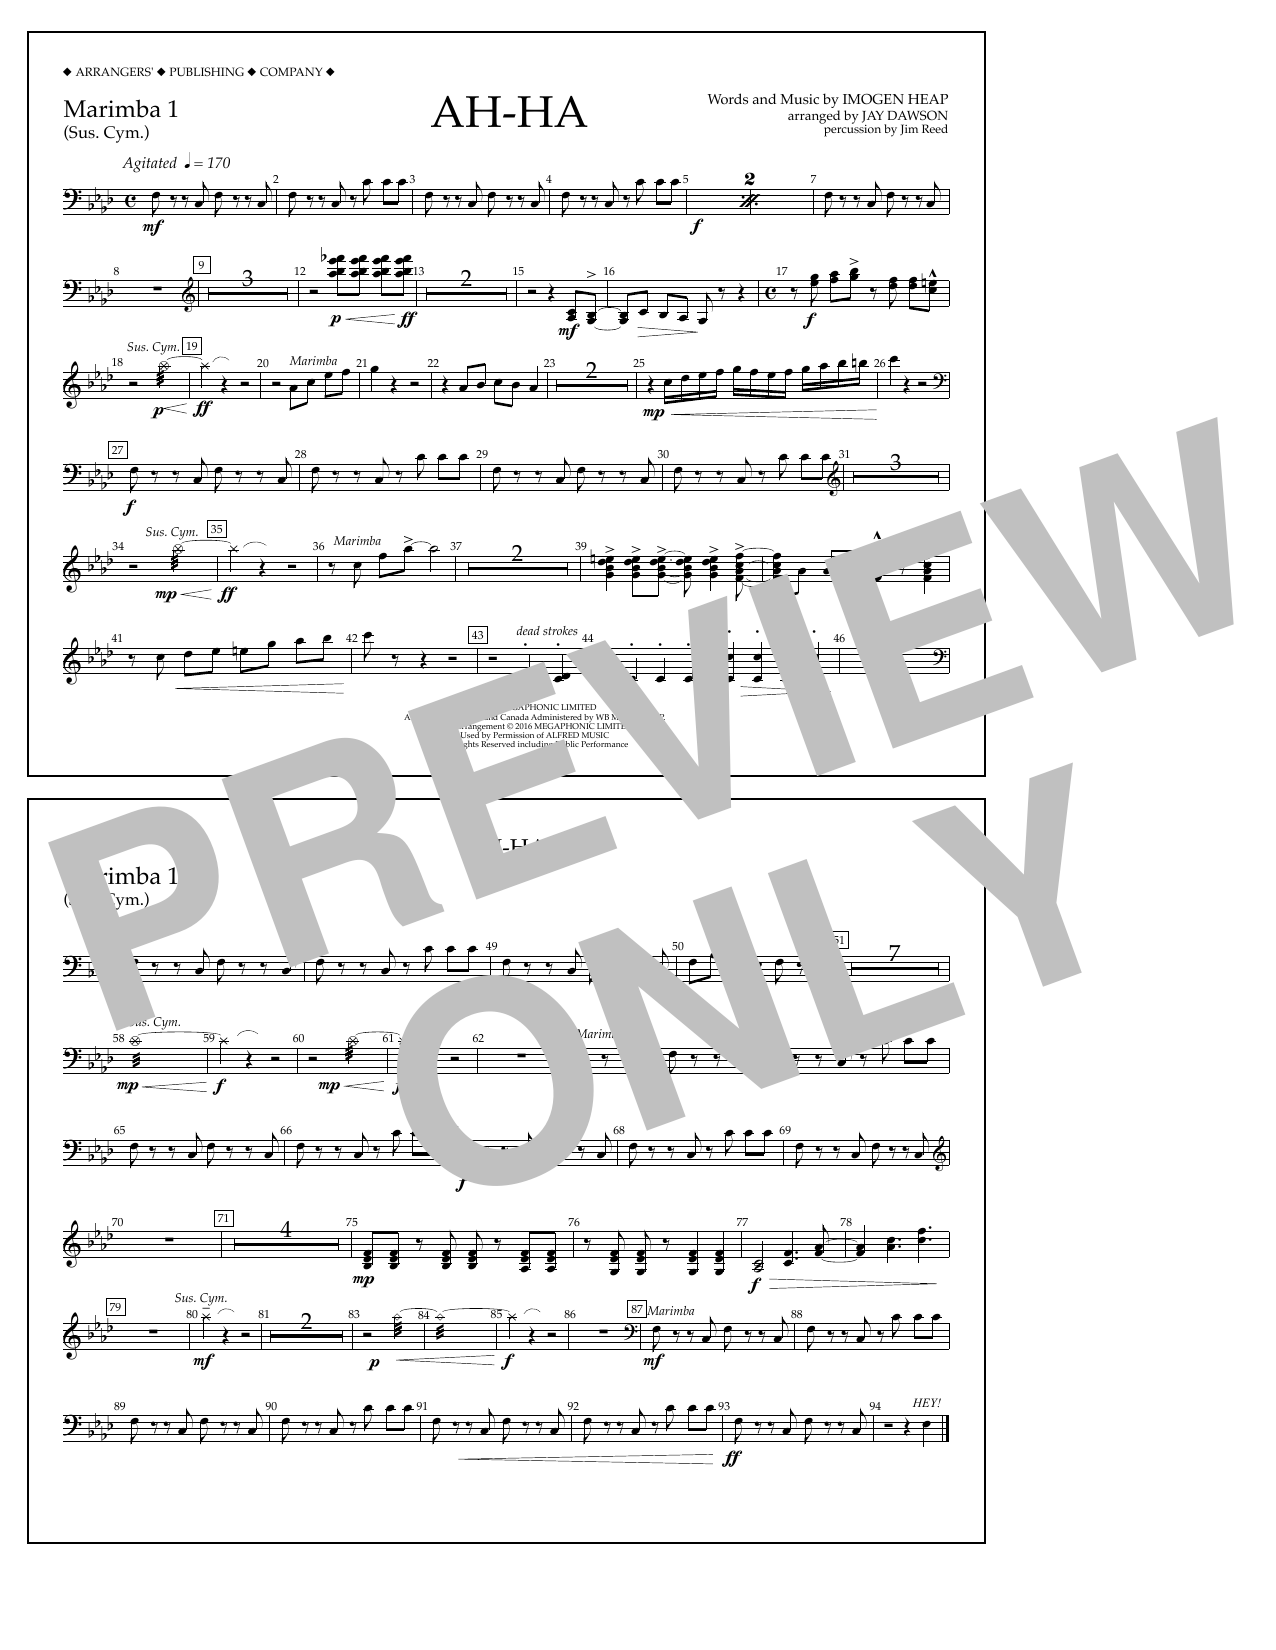 Download Jay Dawson Ah-ha - Marimba 1 Sheet Music